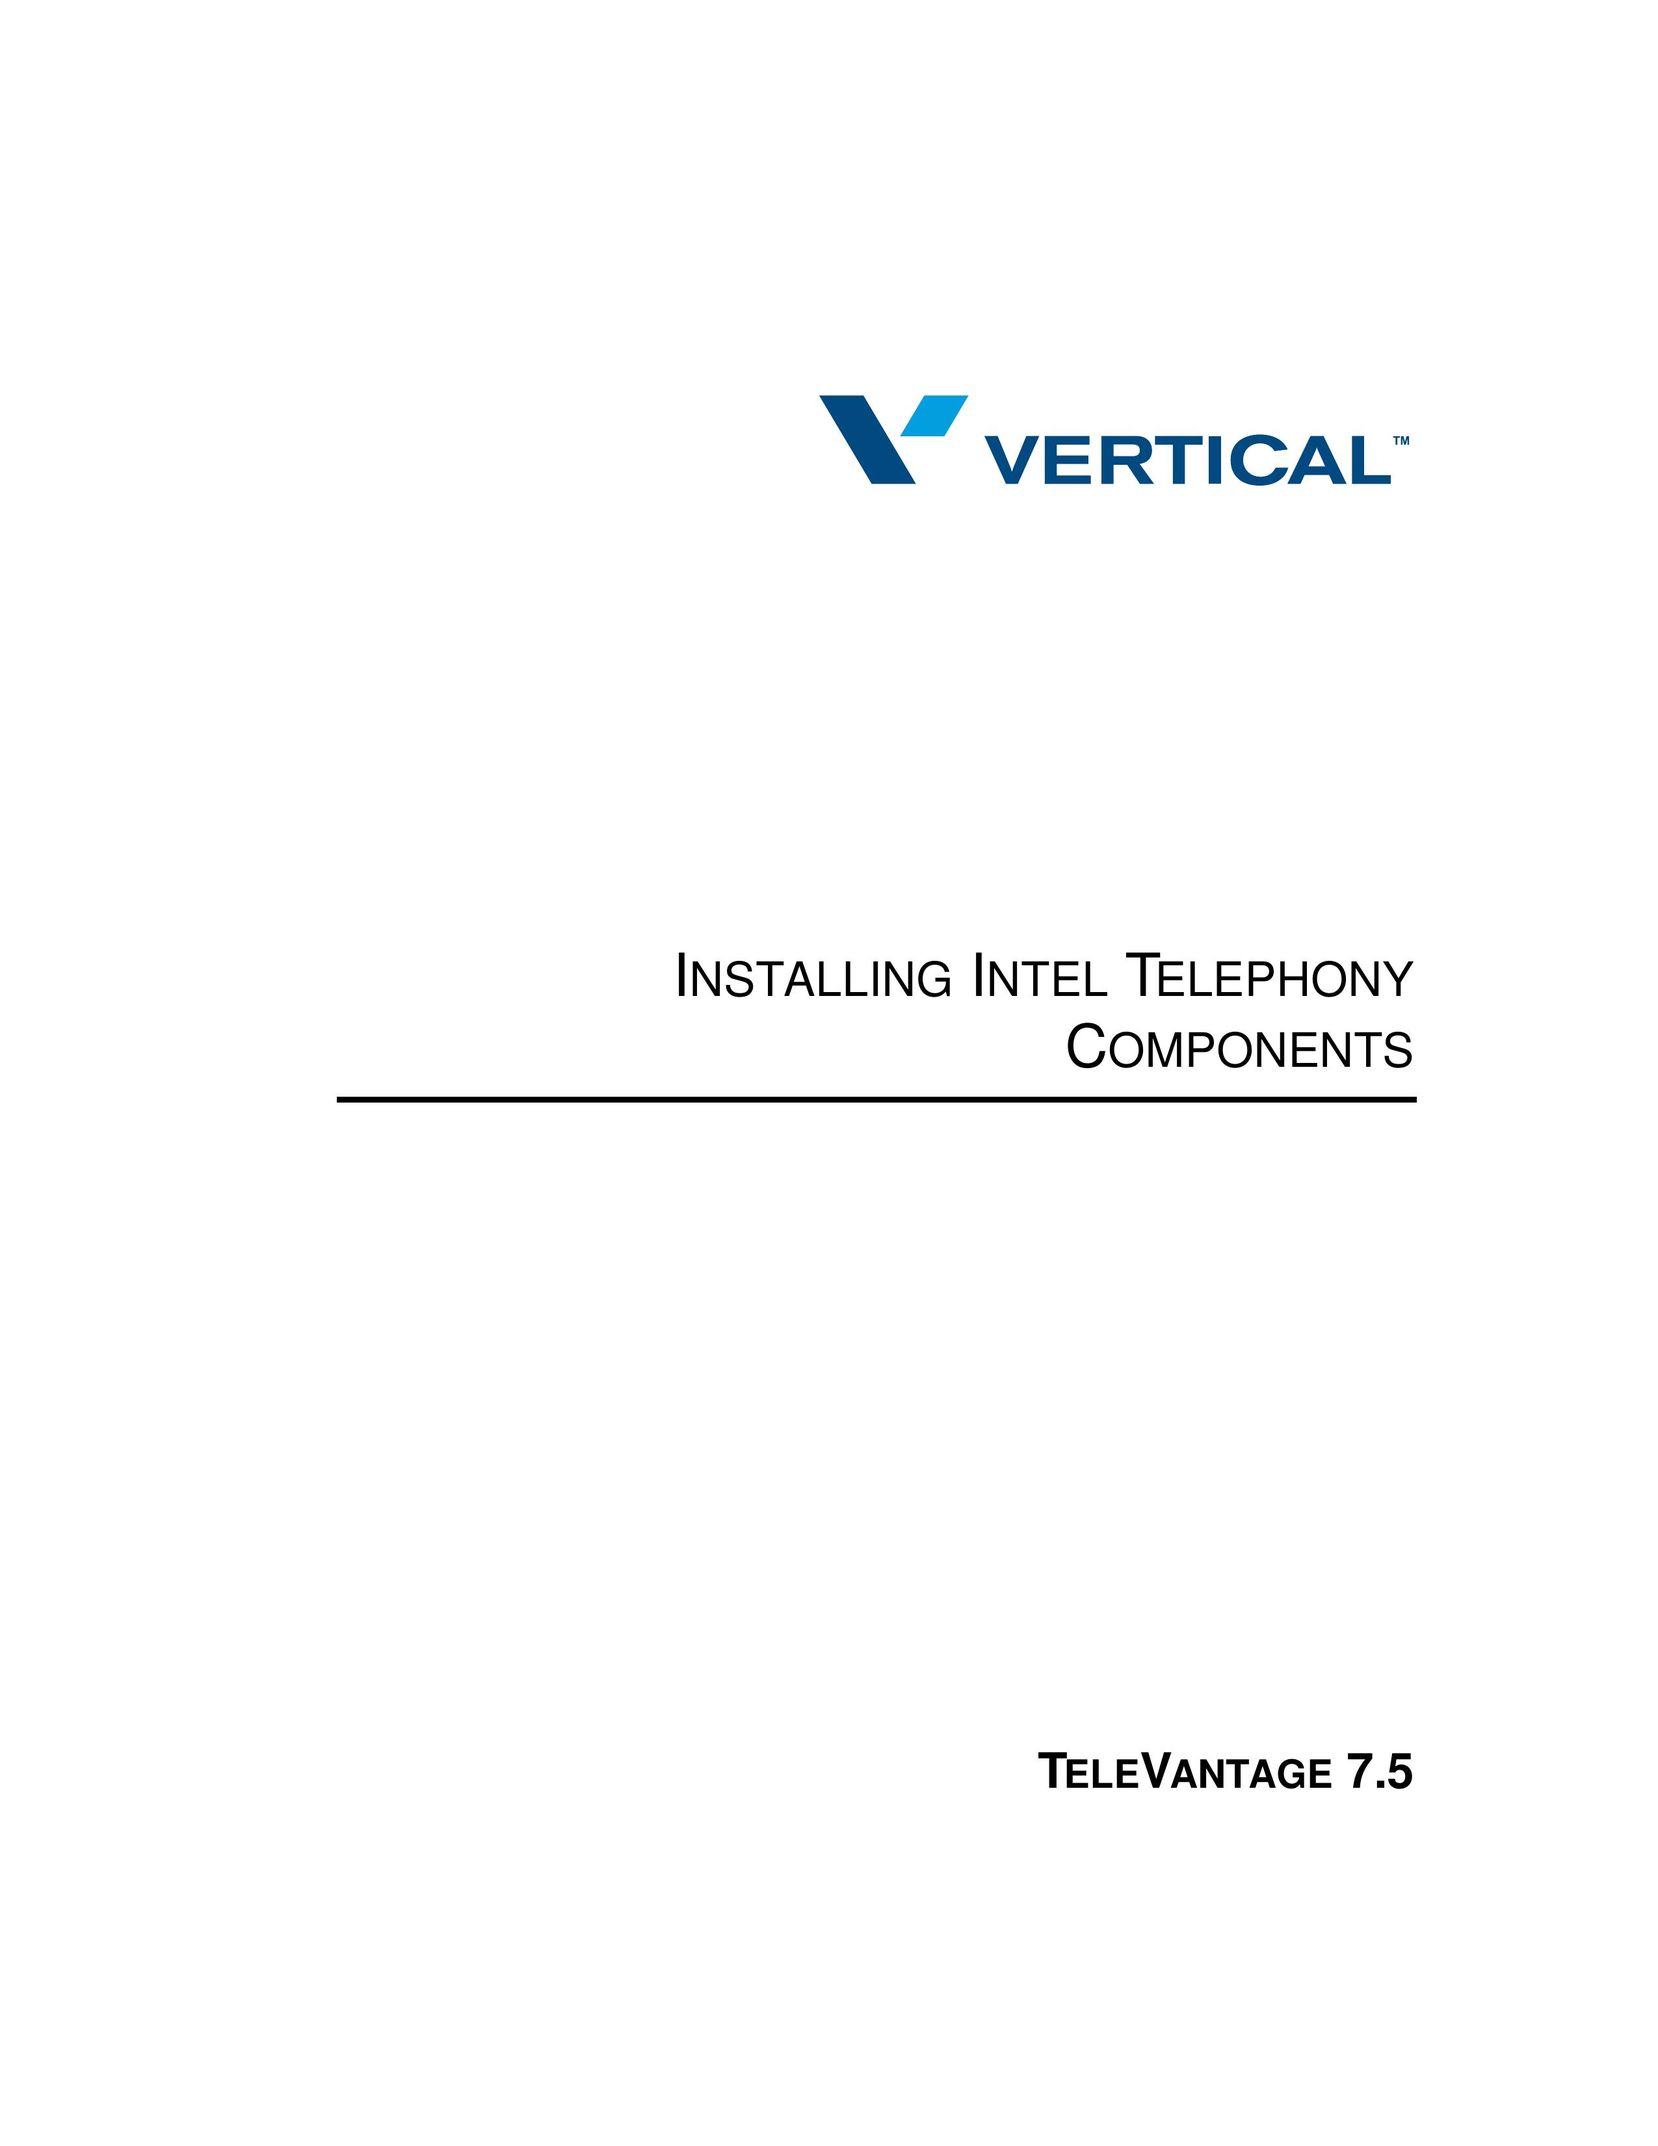 Vertical Communications TeleVantage 7.5 IP Phone User Manual